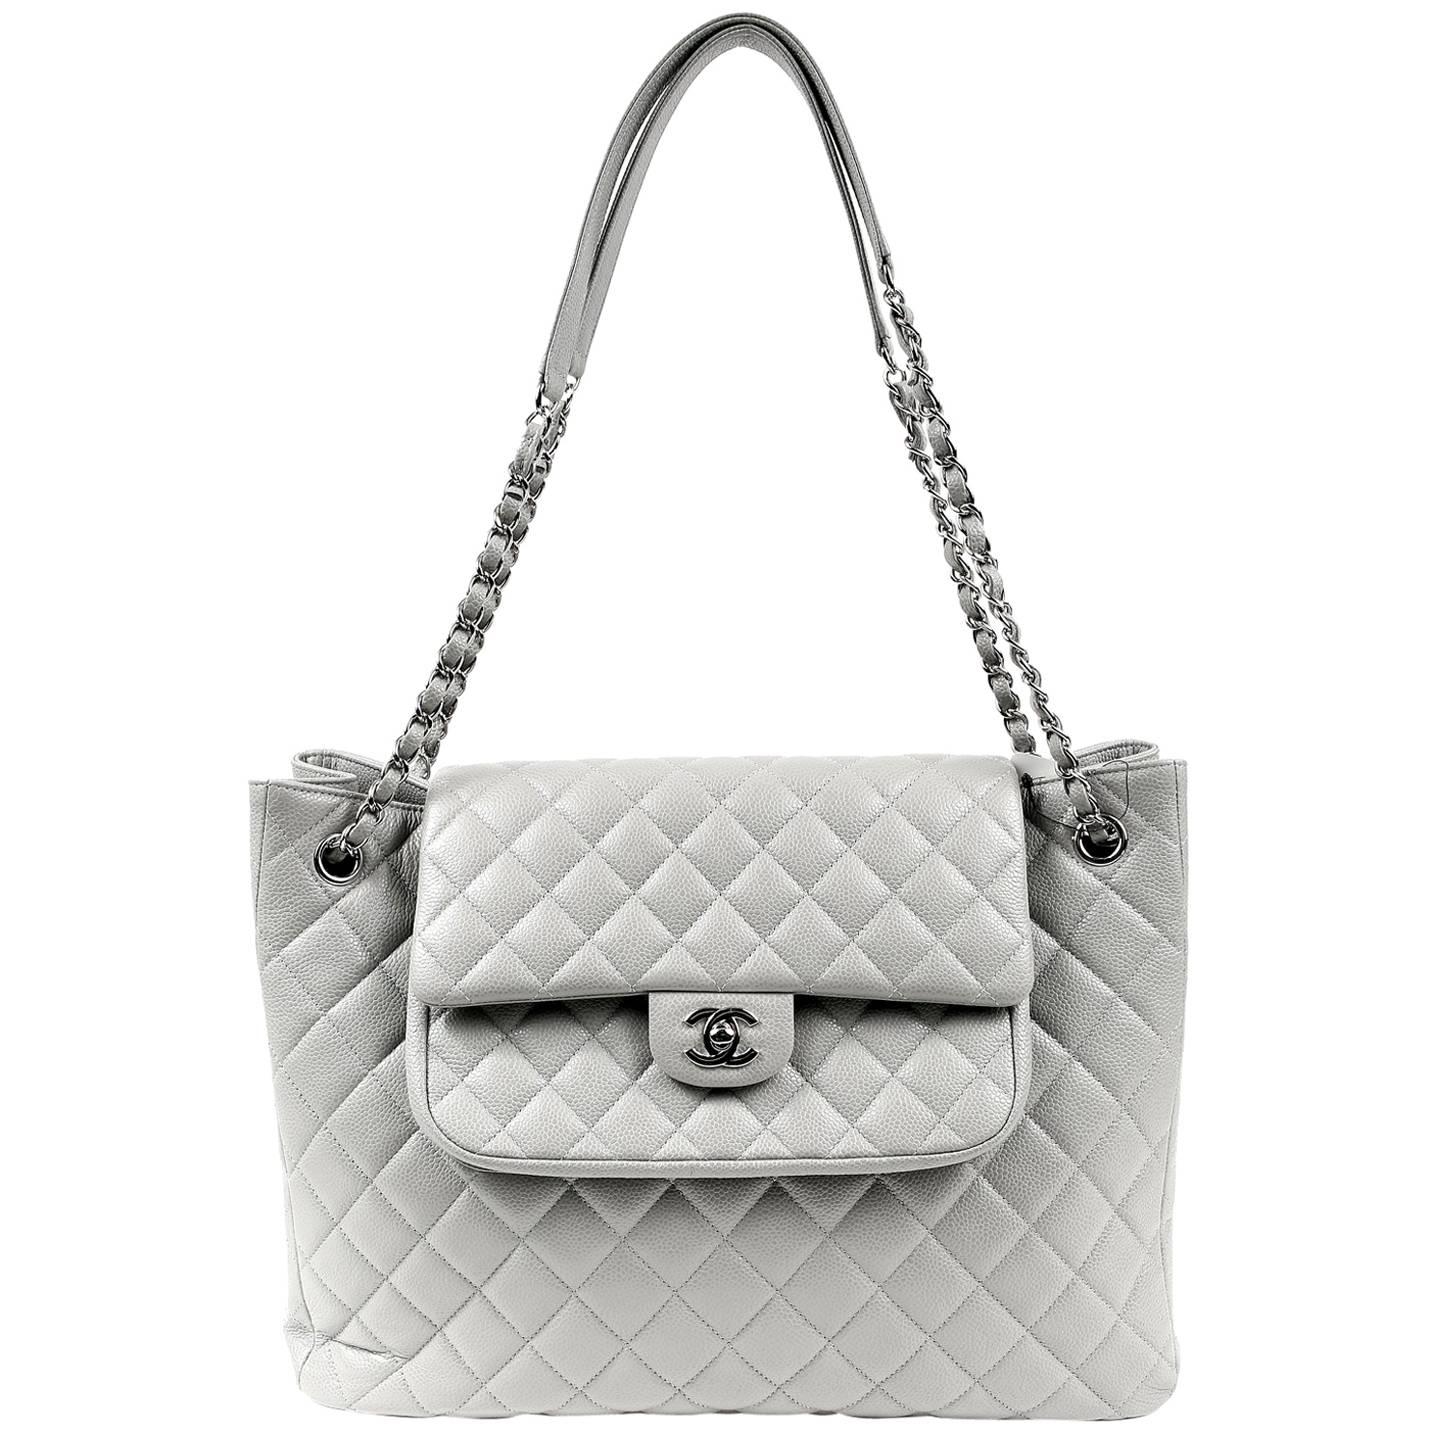 Chanel Grey Caviar Leather Tote Bag